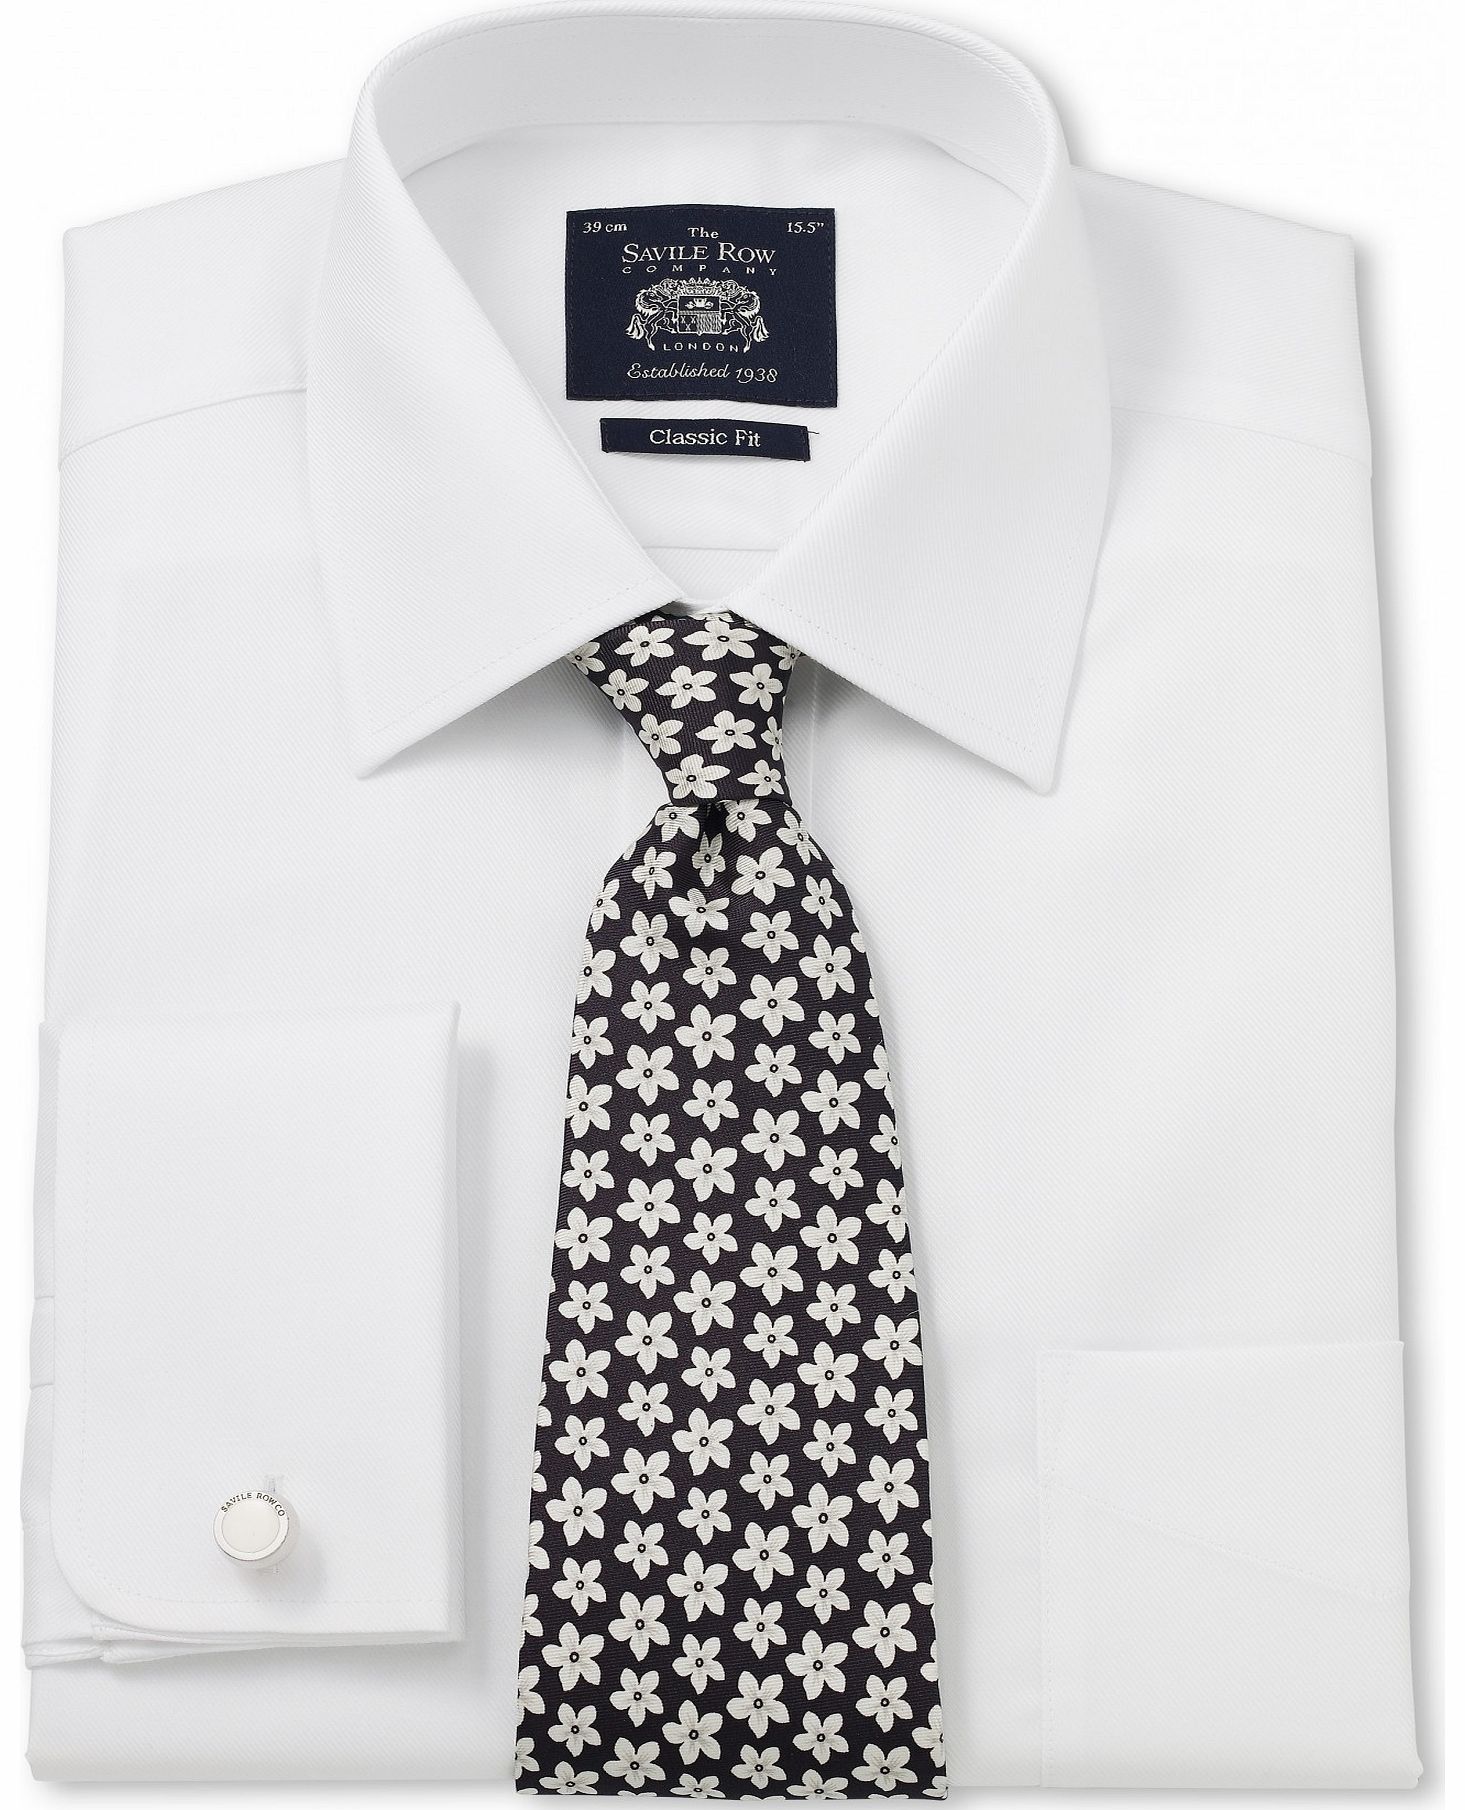 Savile Row Company White Twill Windsor Collar Classic Fit Shirt 15